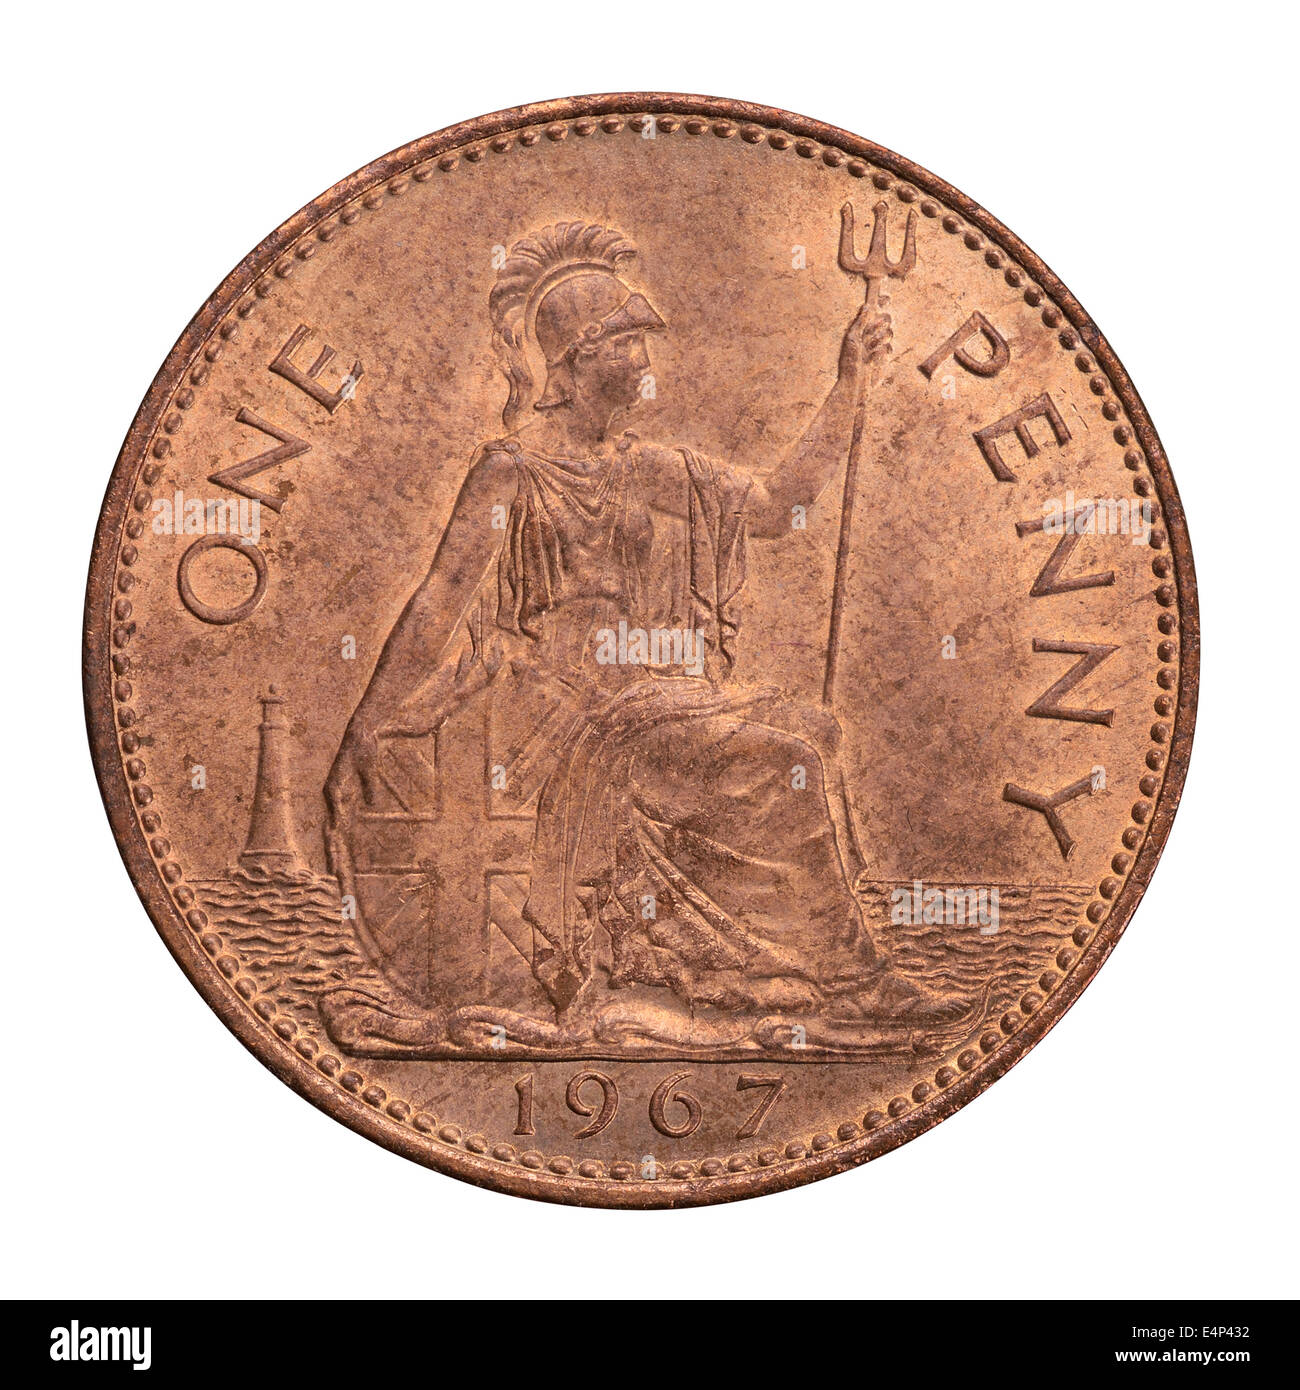 1967 britische One Penny Münze Stockfoto